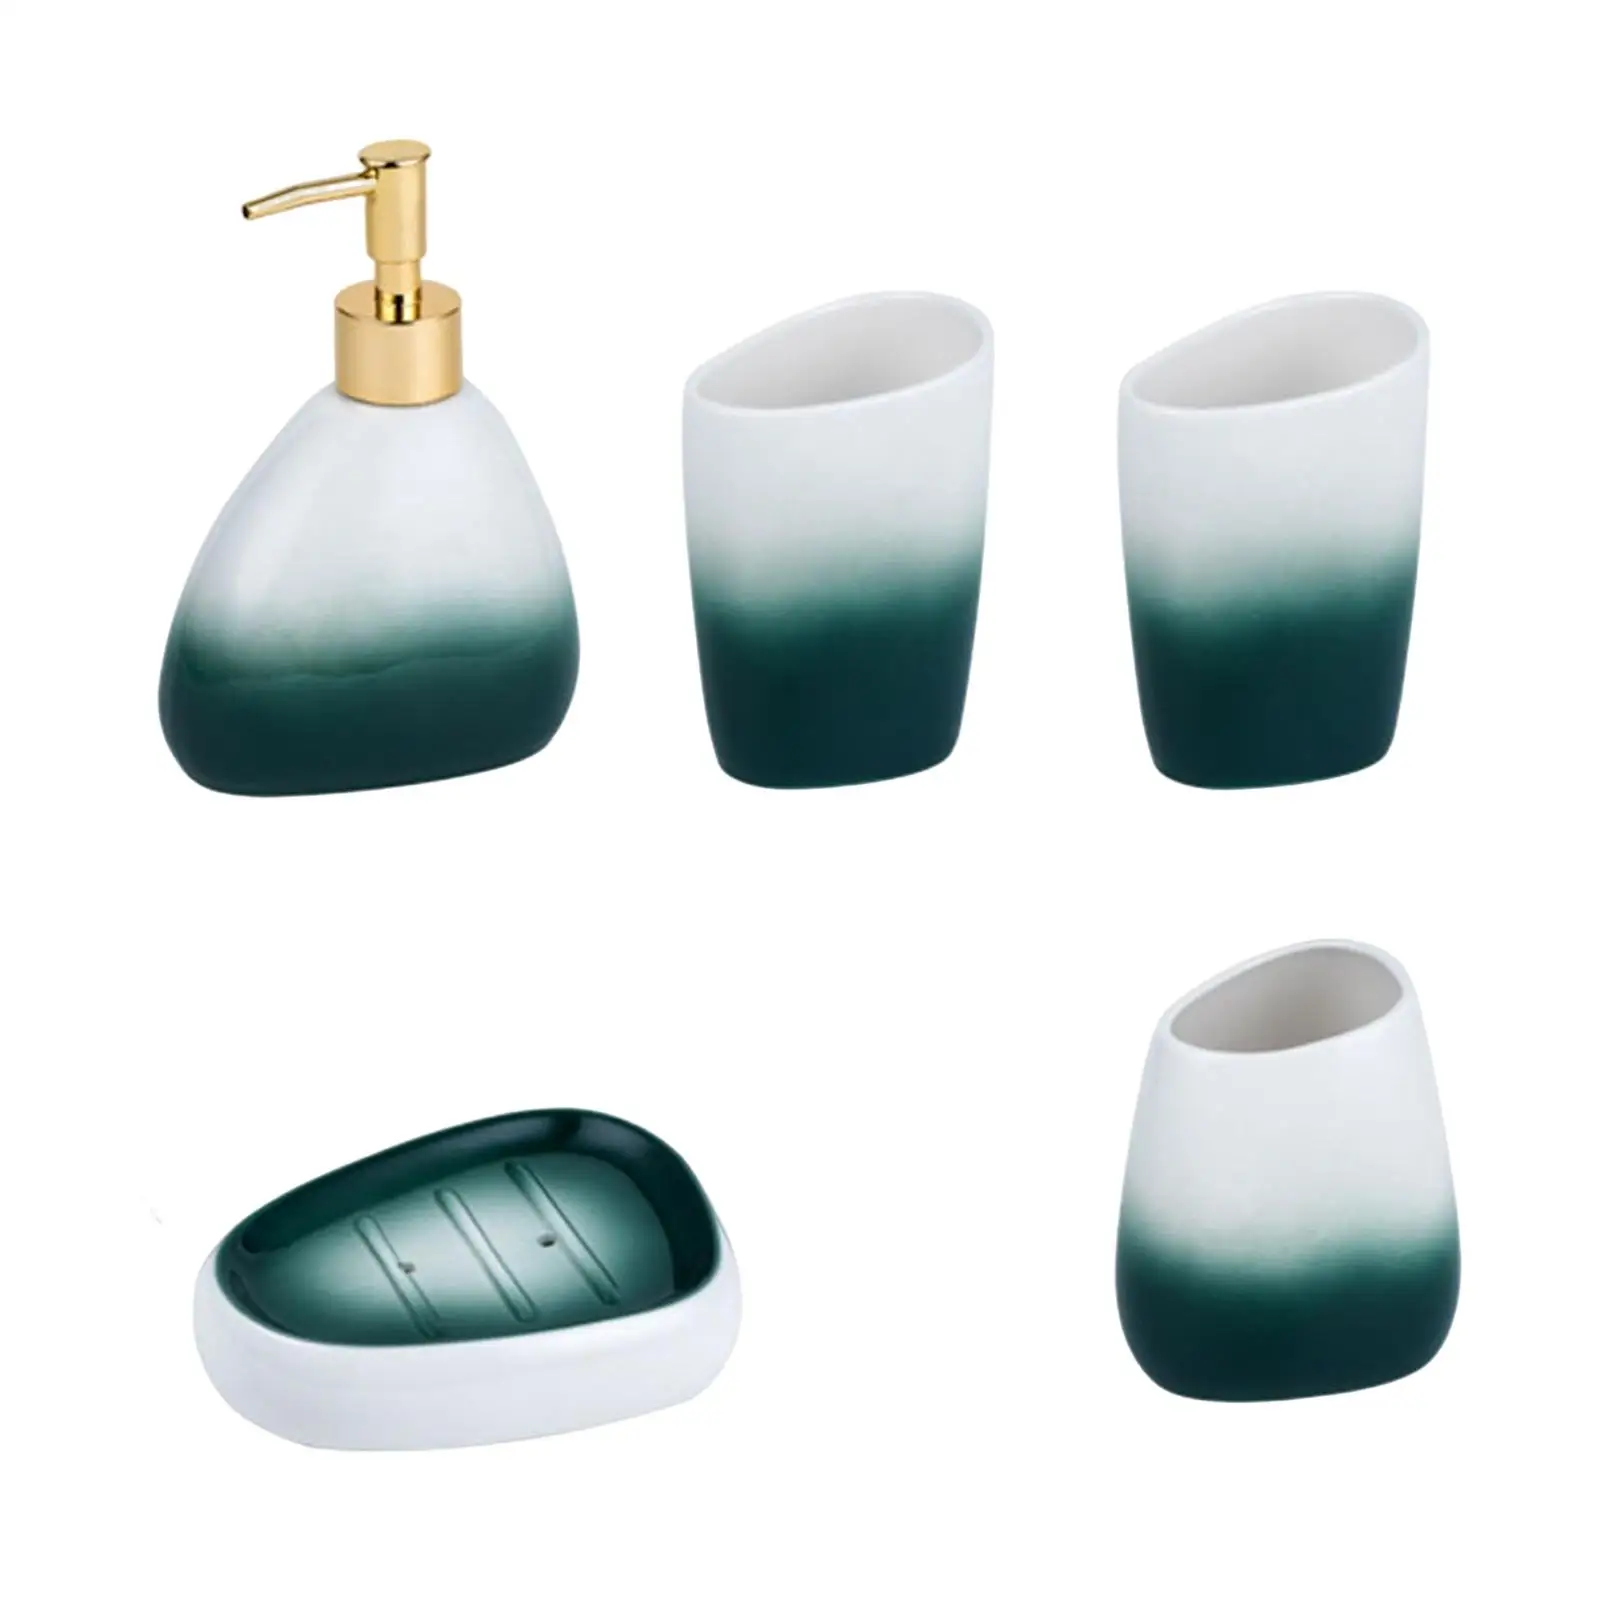 5x Nordic Bathroom Accessories Set Toothbrush Holder Soap Dish Lotion Bottle Bath Essential Set for Apartment Toilet Decoration